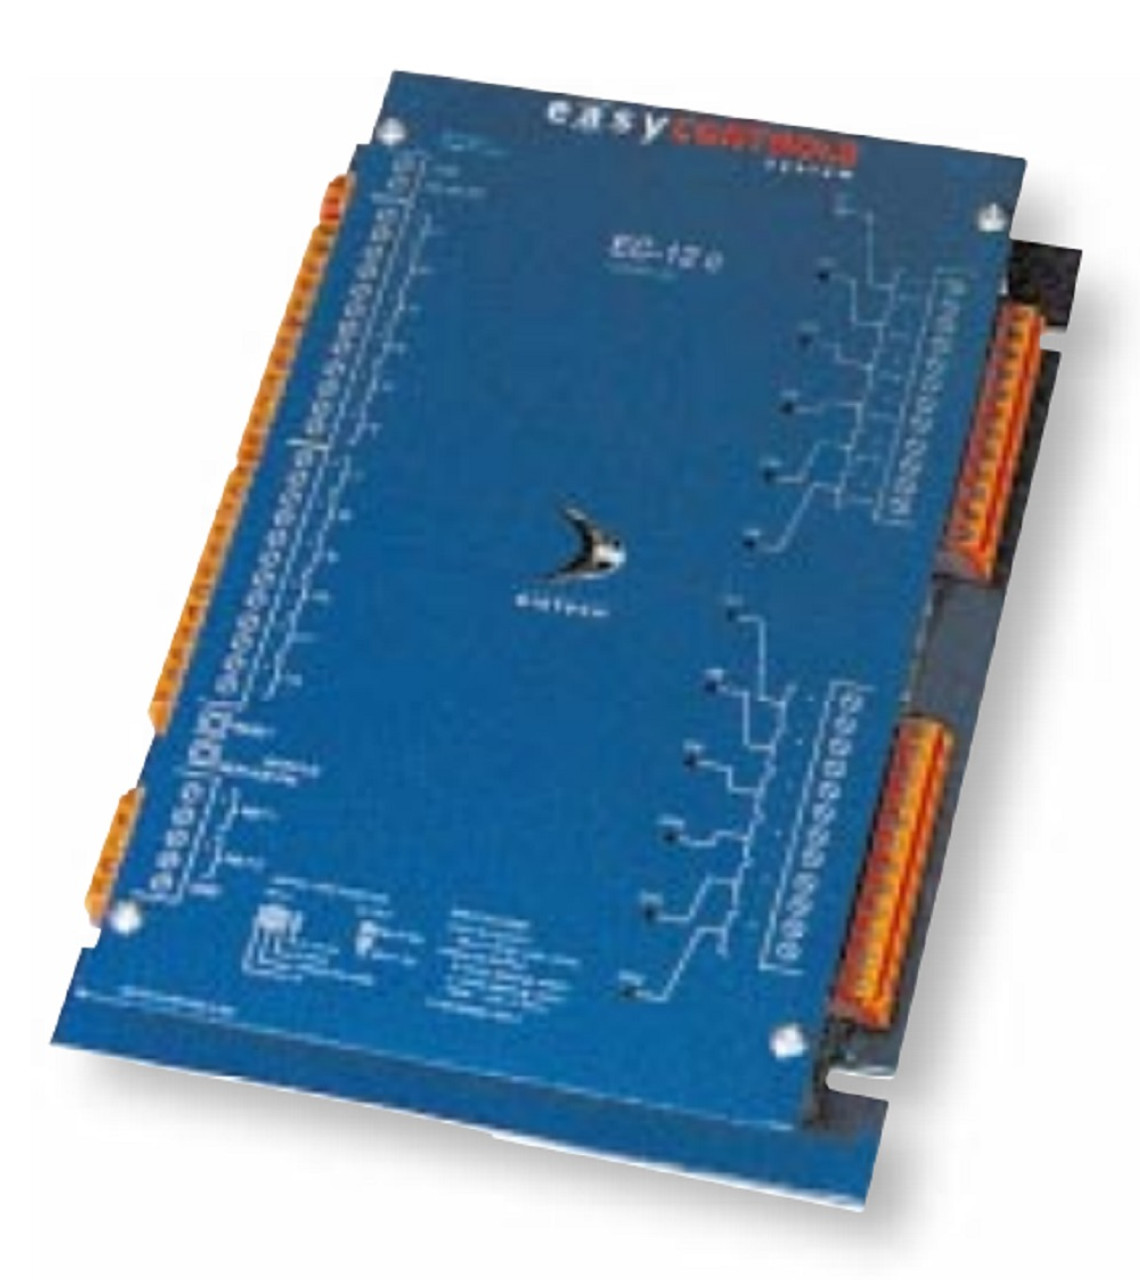 Distech CDIP-12CX-01 EC-12C EasyControls 24-Point Free Programmable Controller [Refurbished]